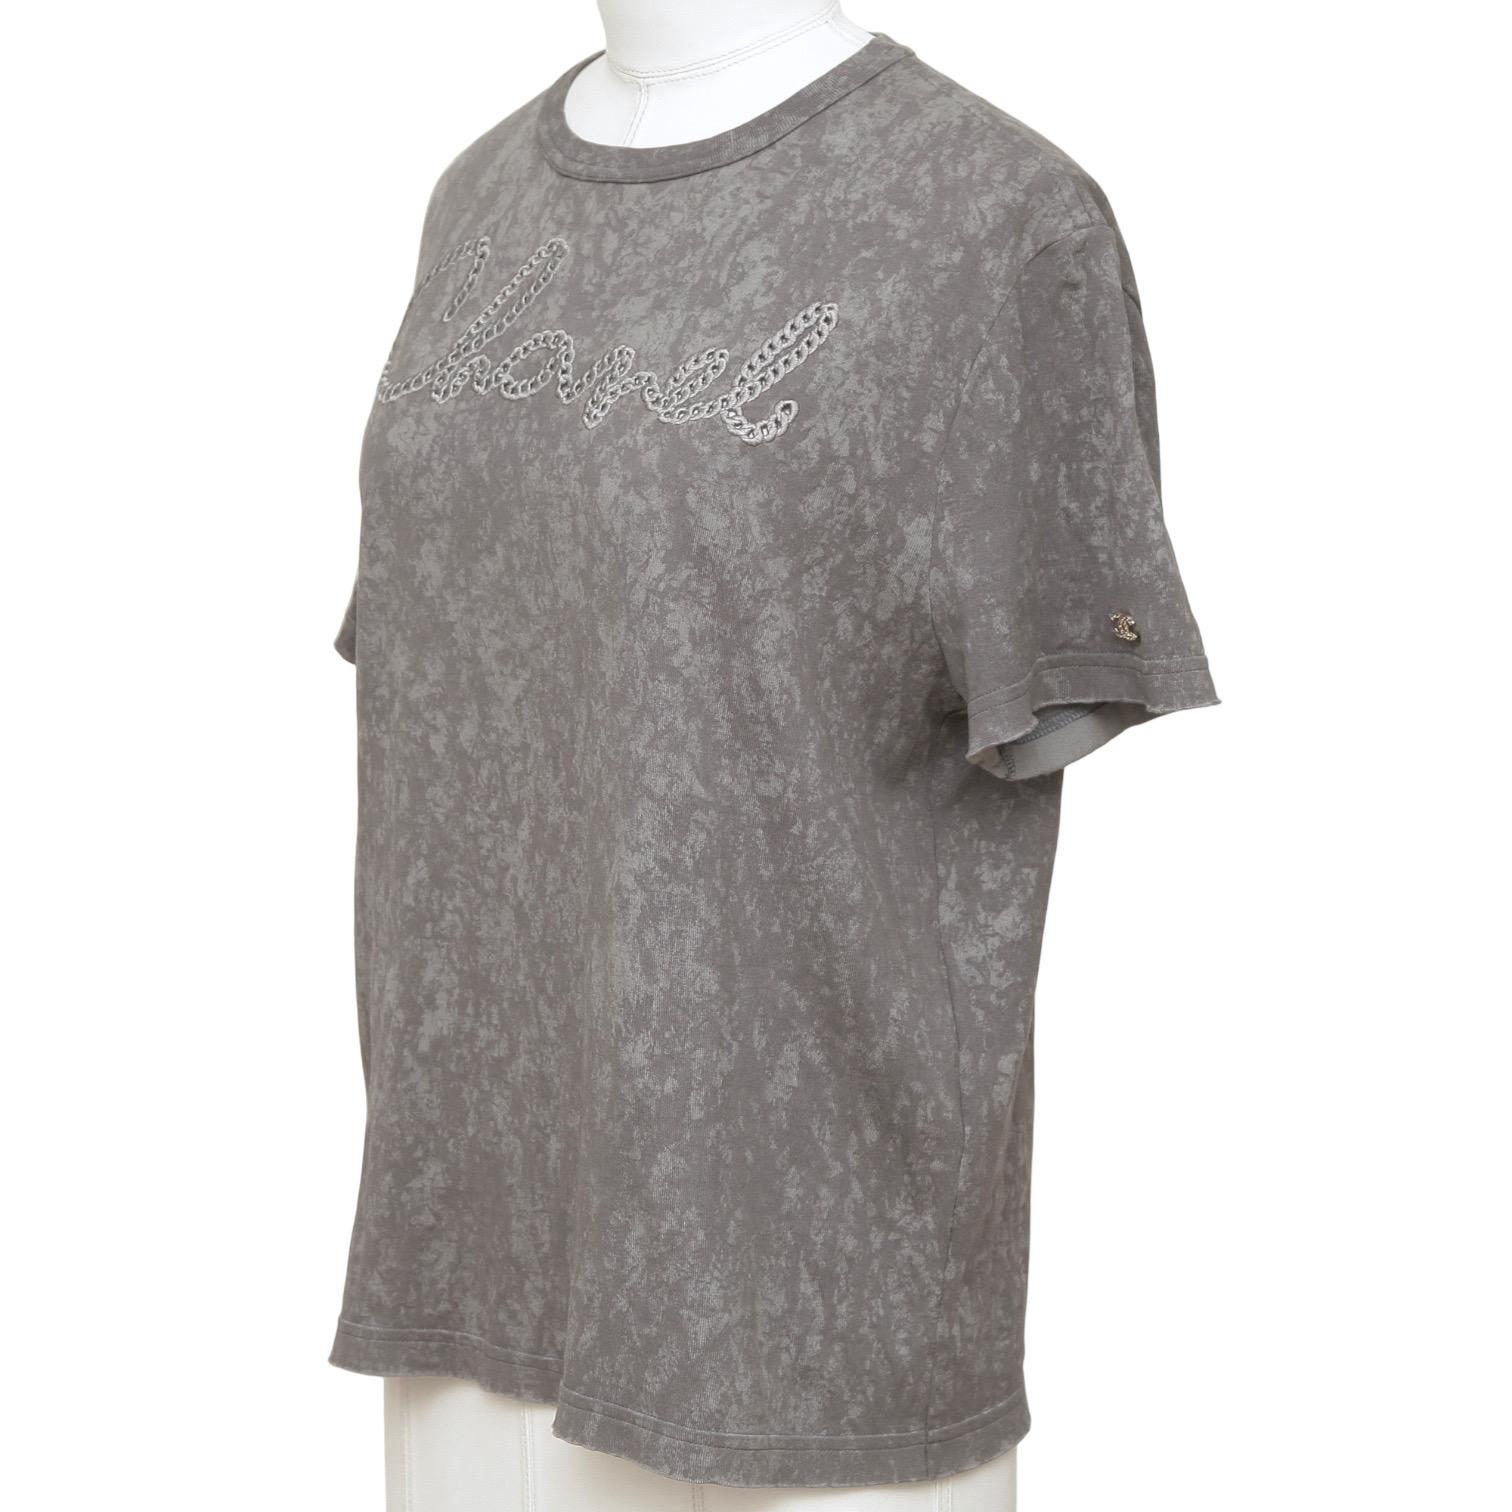 Gray CHANEL Grey T-Shirt Top Shirt Short Sleeve Crew Neck Tie-Dye 34/36 2020